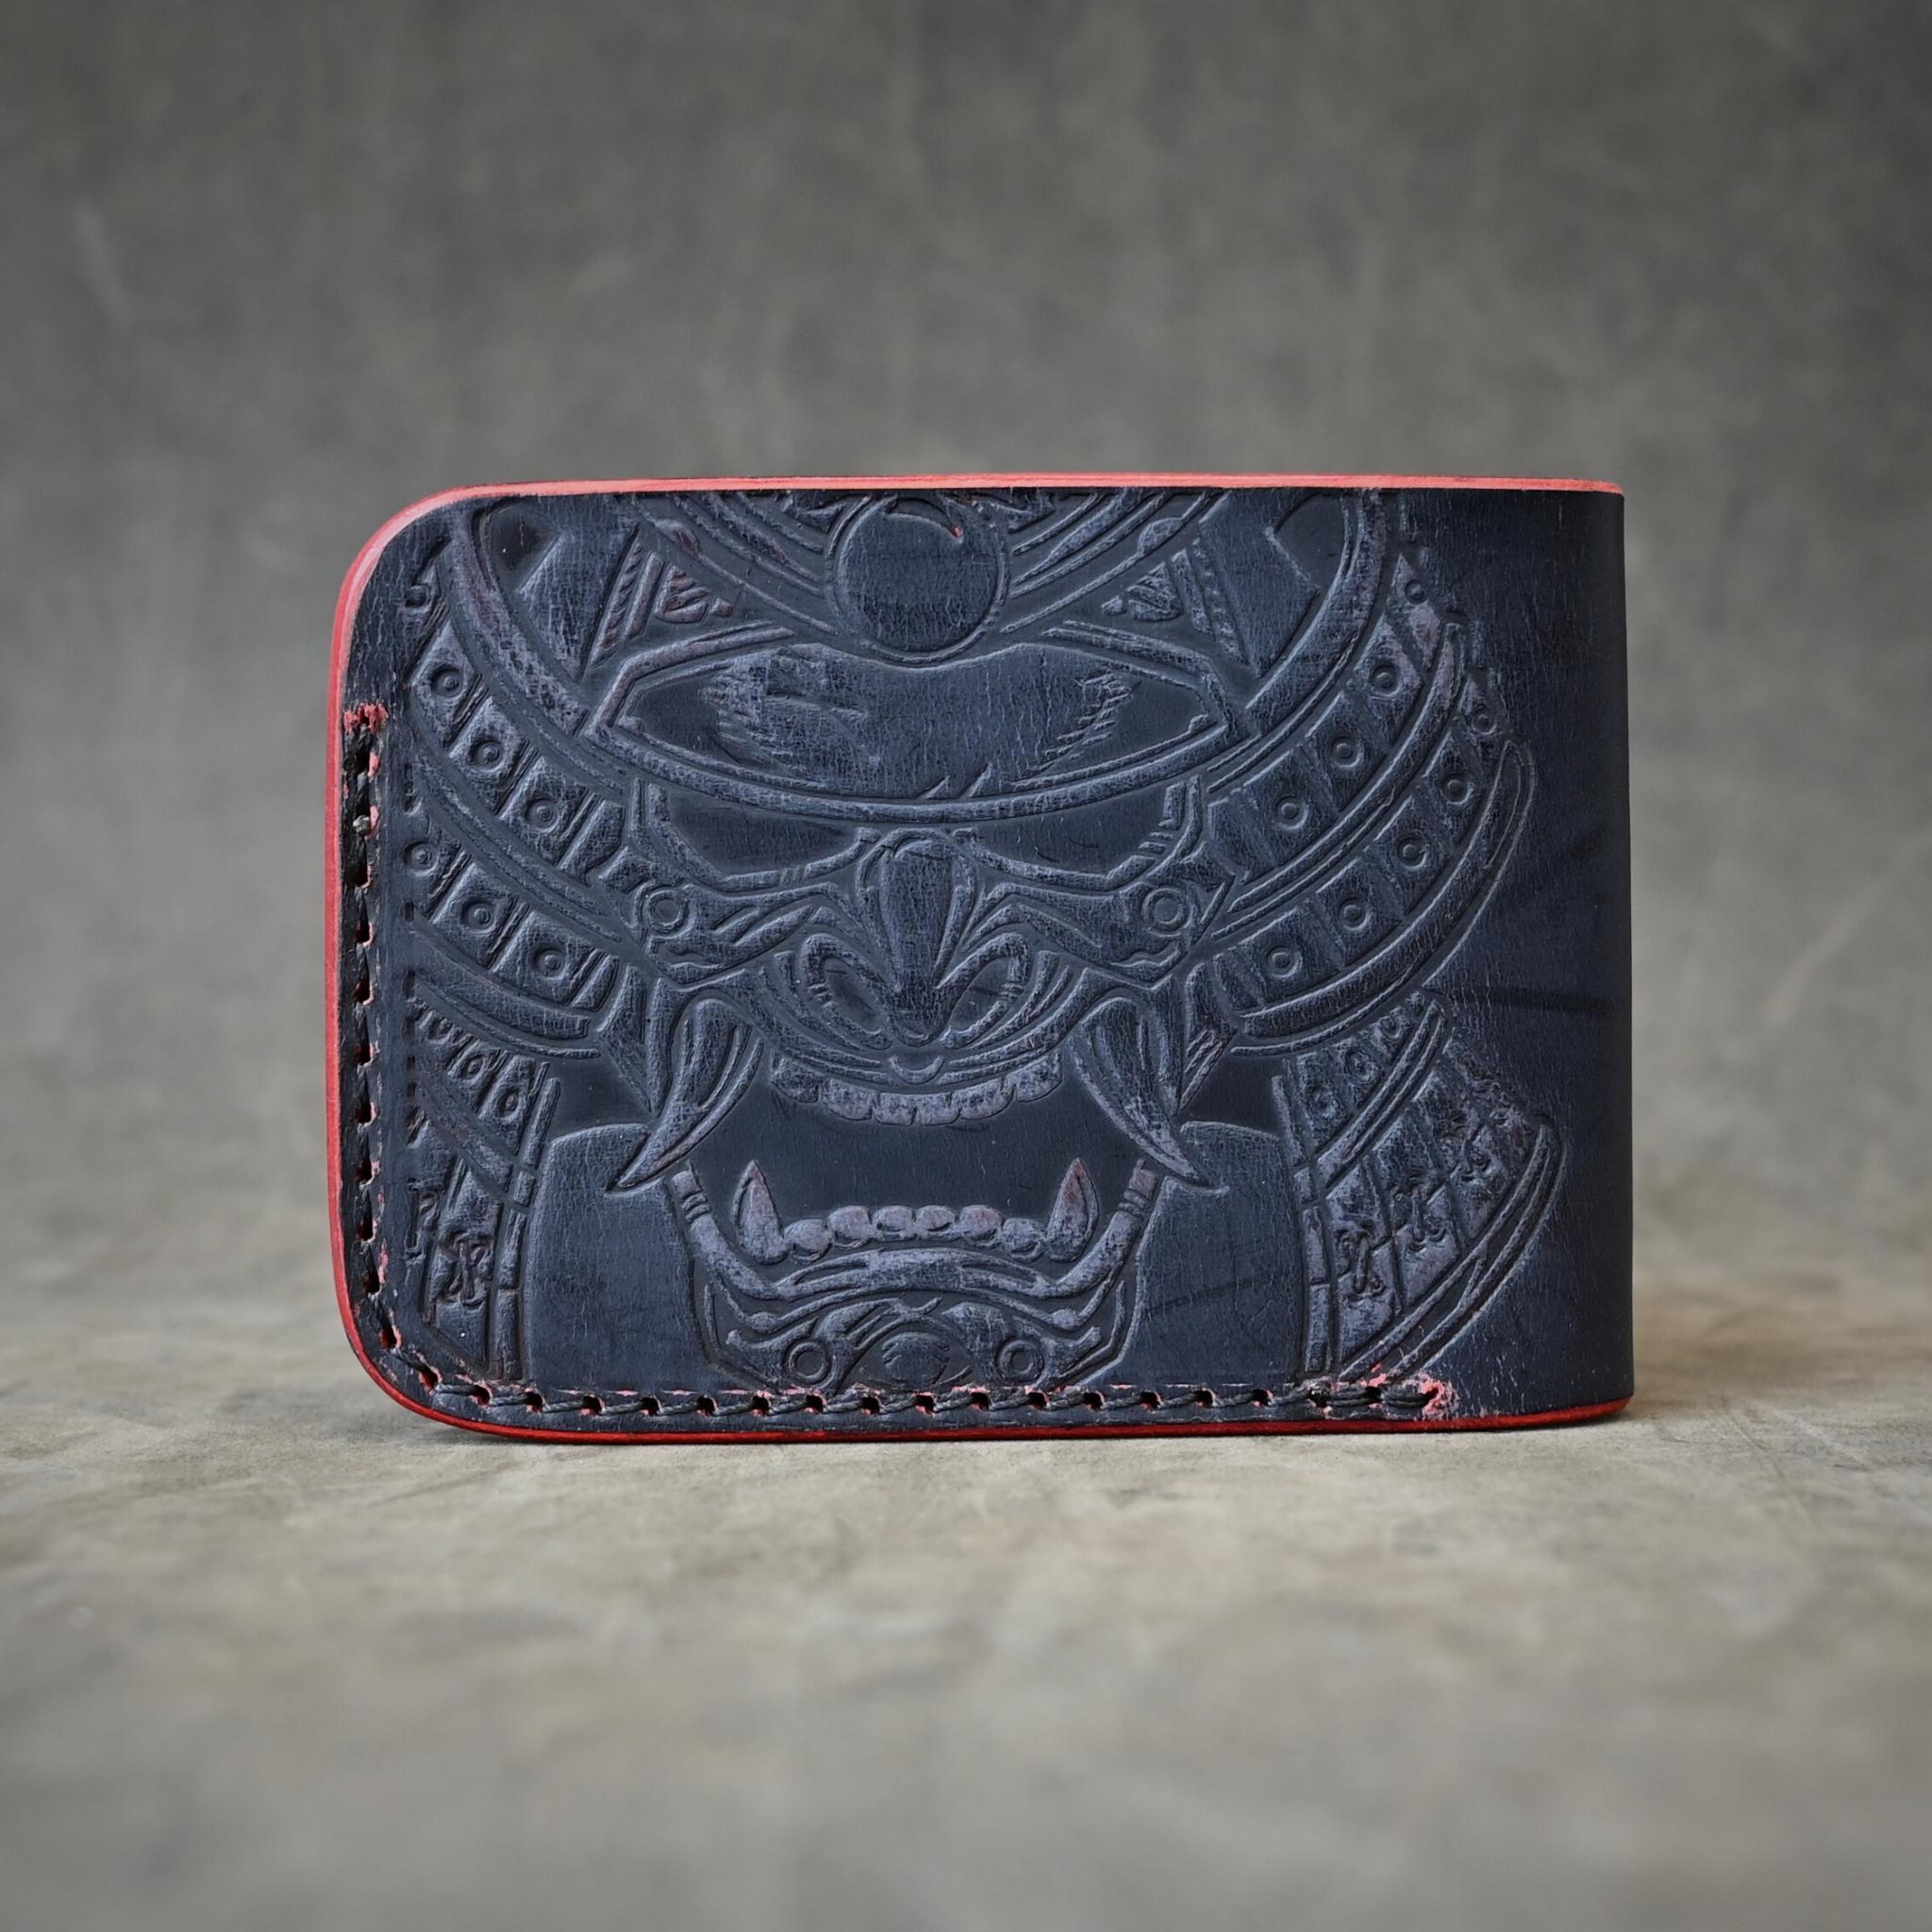 Bifold 2.0 Leather Wallet - Black Cherry Ghost Samurai Mask